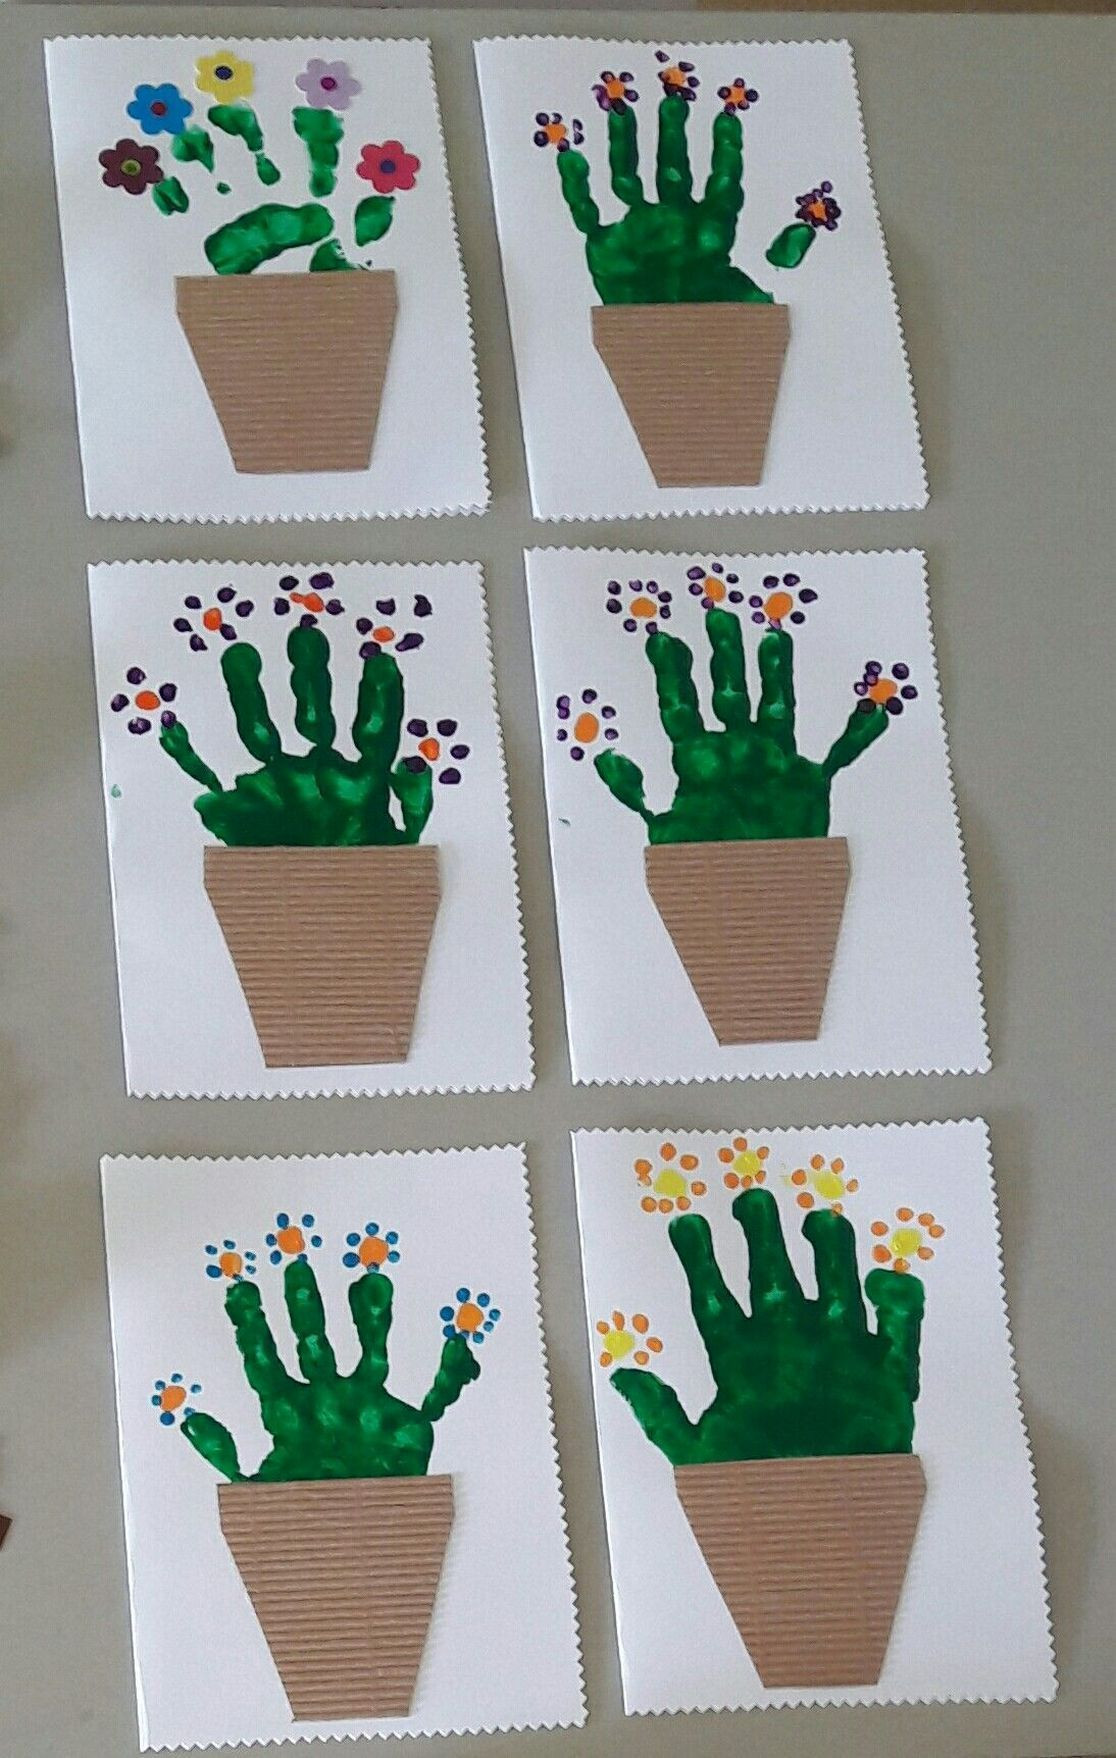 Preschool Artwork Ideas
 Spring crafts preschool creative art ideas 34